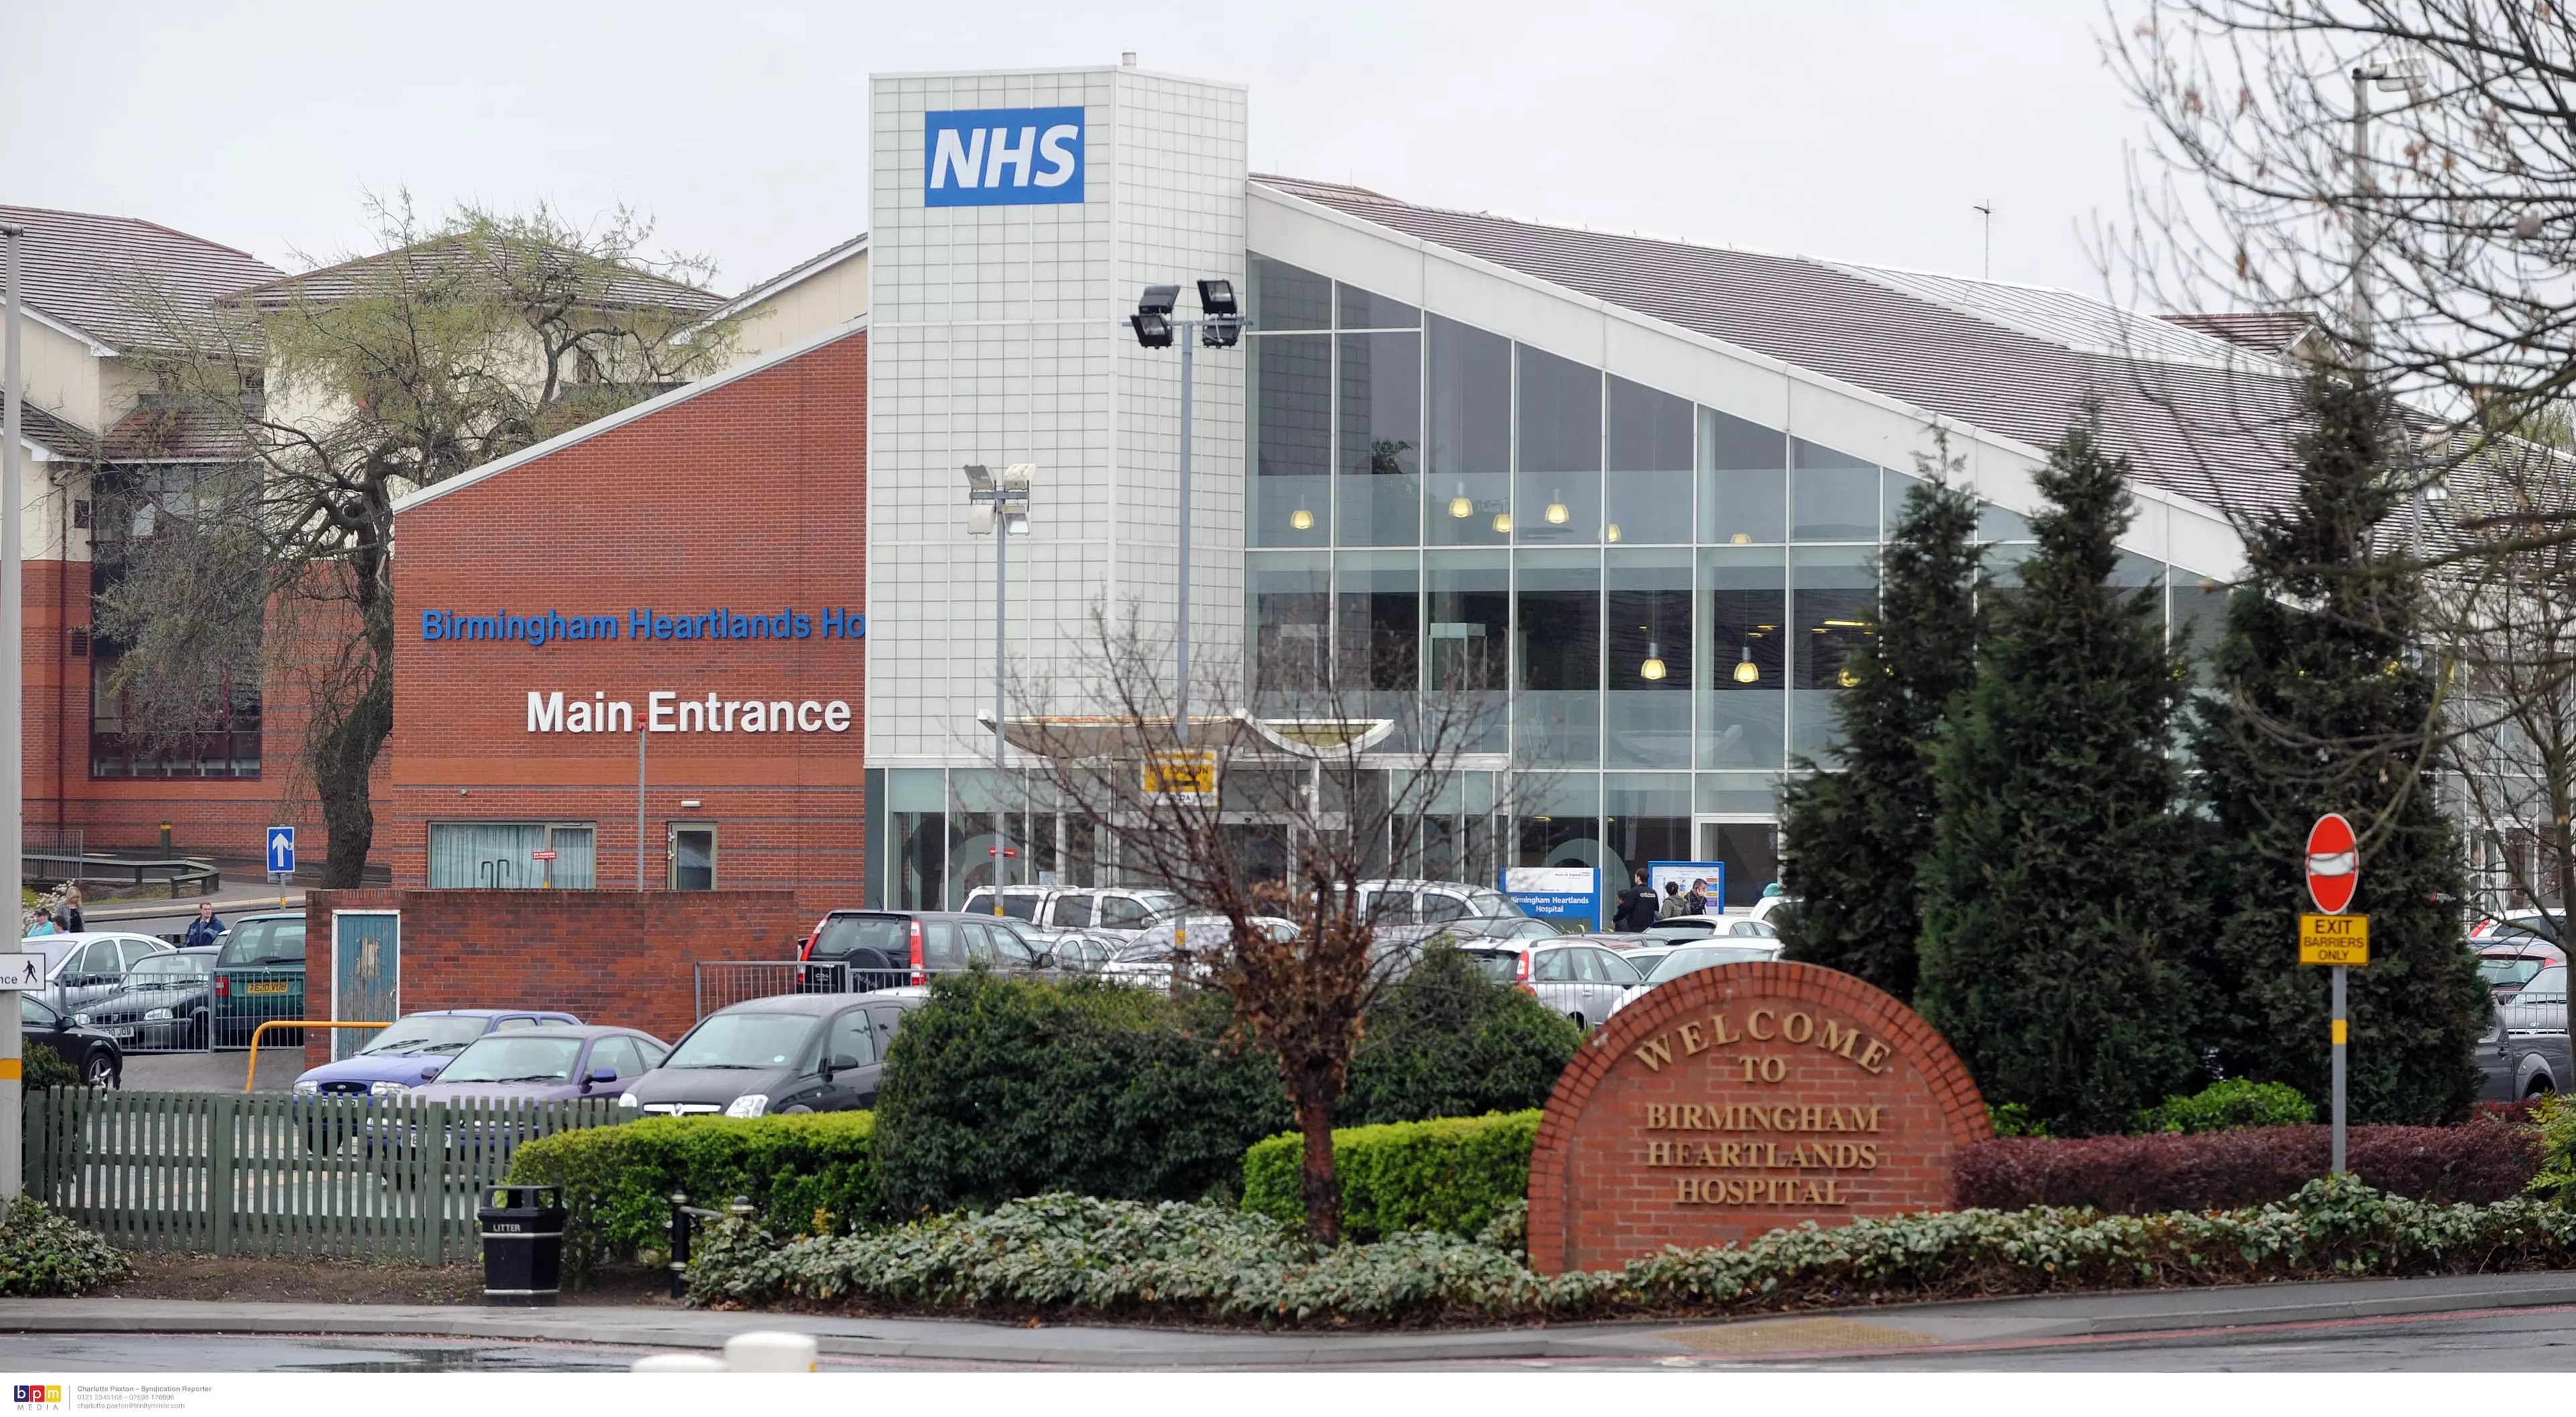 The incident took place in Birmingham Heartlands Hospital.